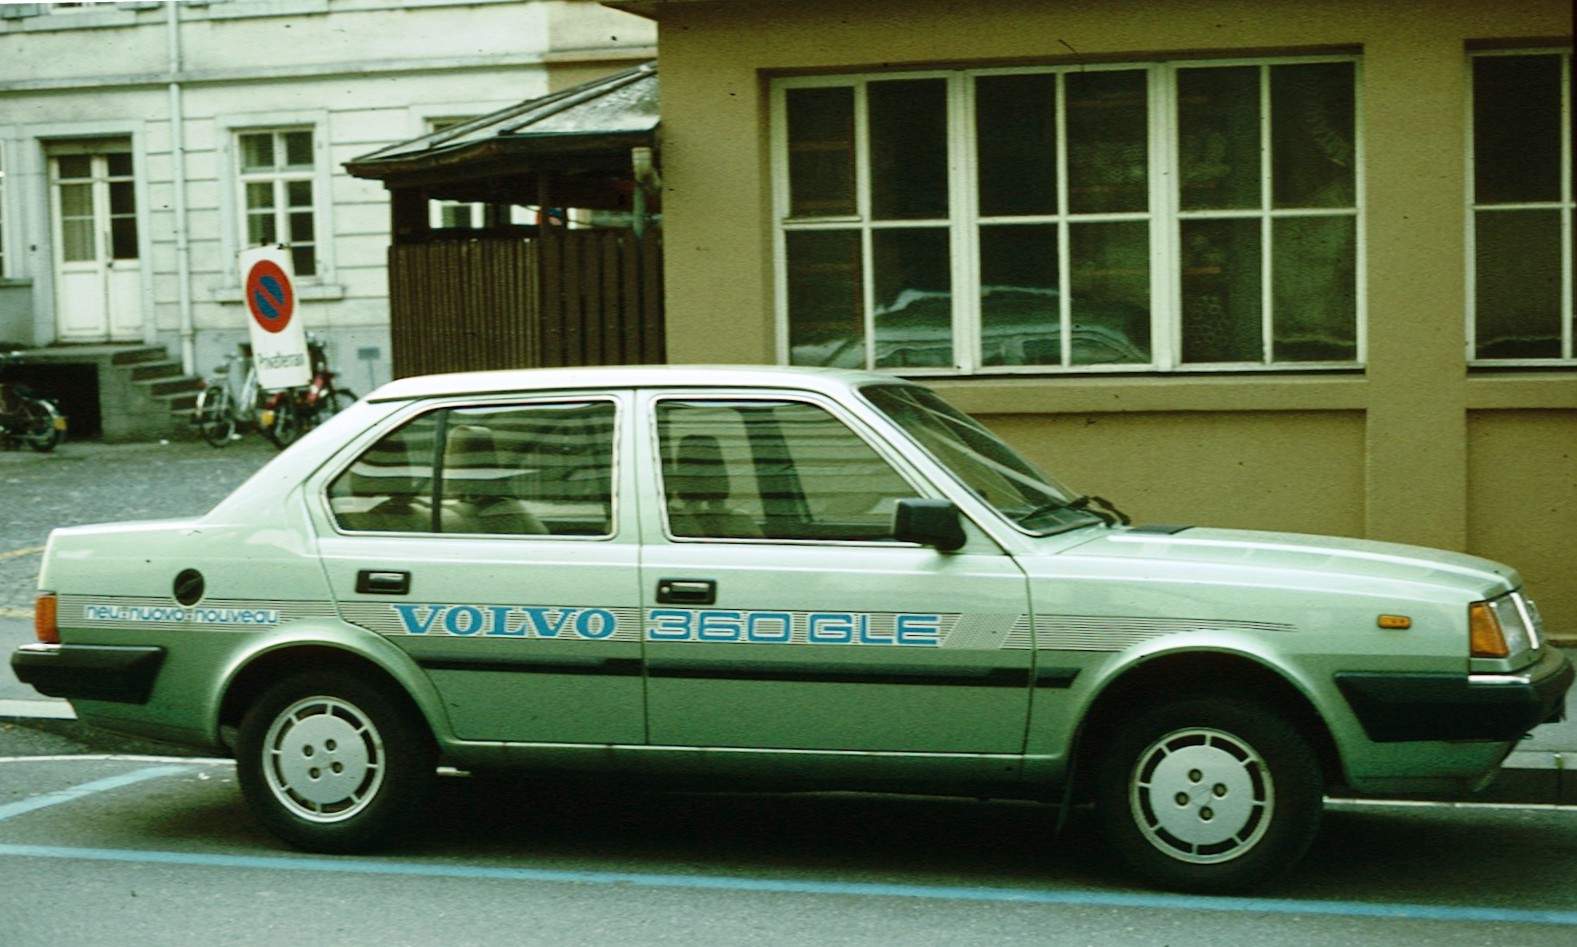 File:Volvo 360 GLE labelled.jpg